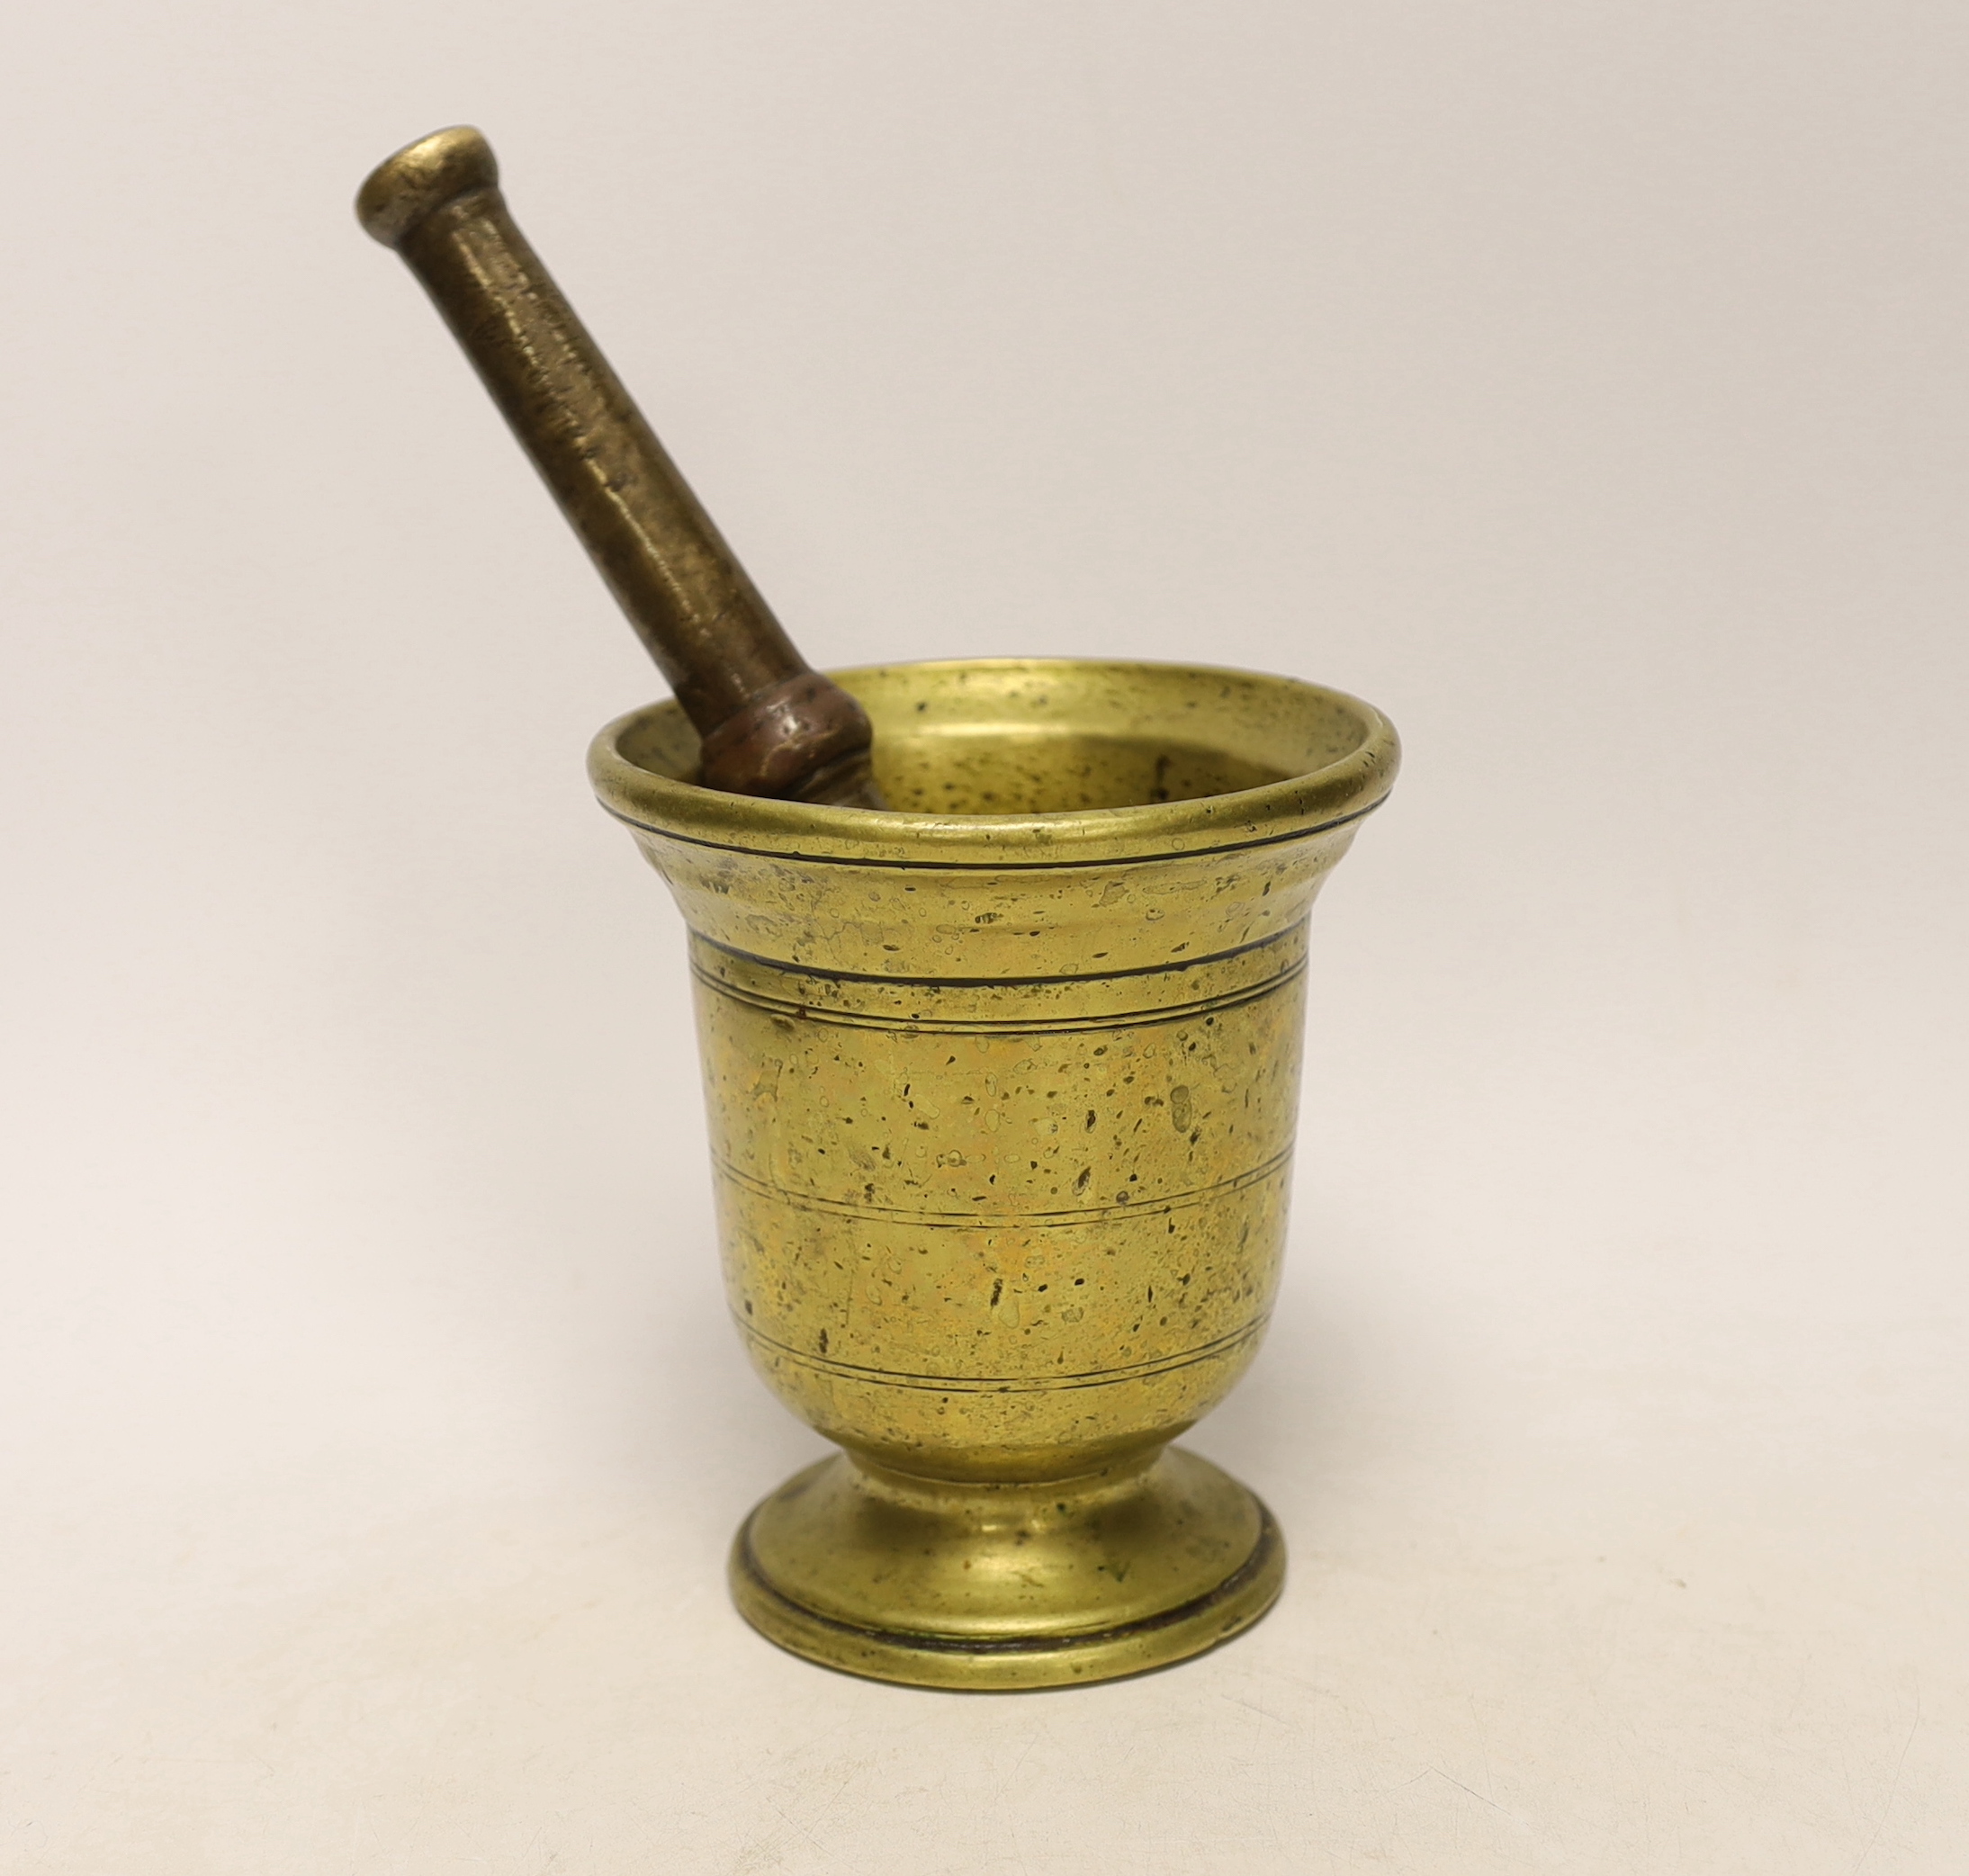 An antique bronze pestle and mortar, 15cm high                                                                                                                                                                              